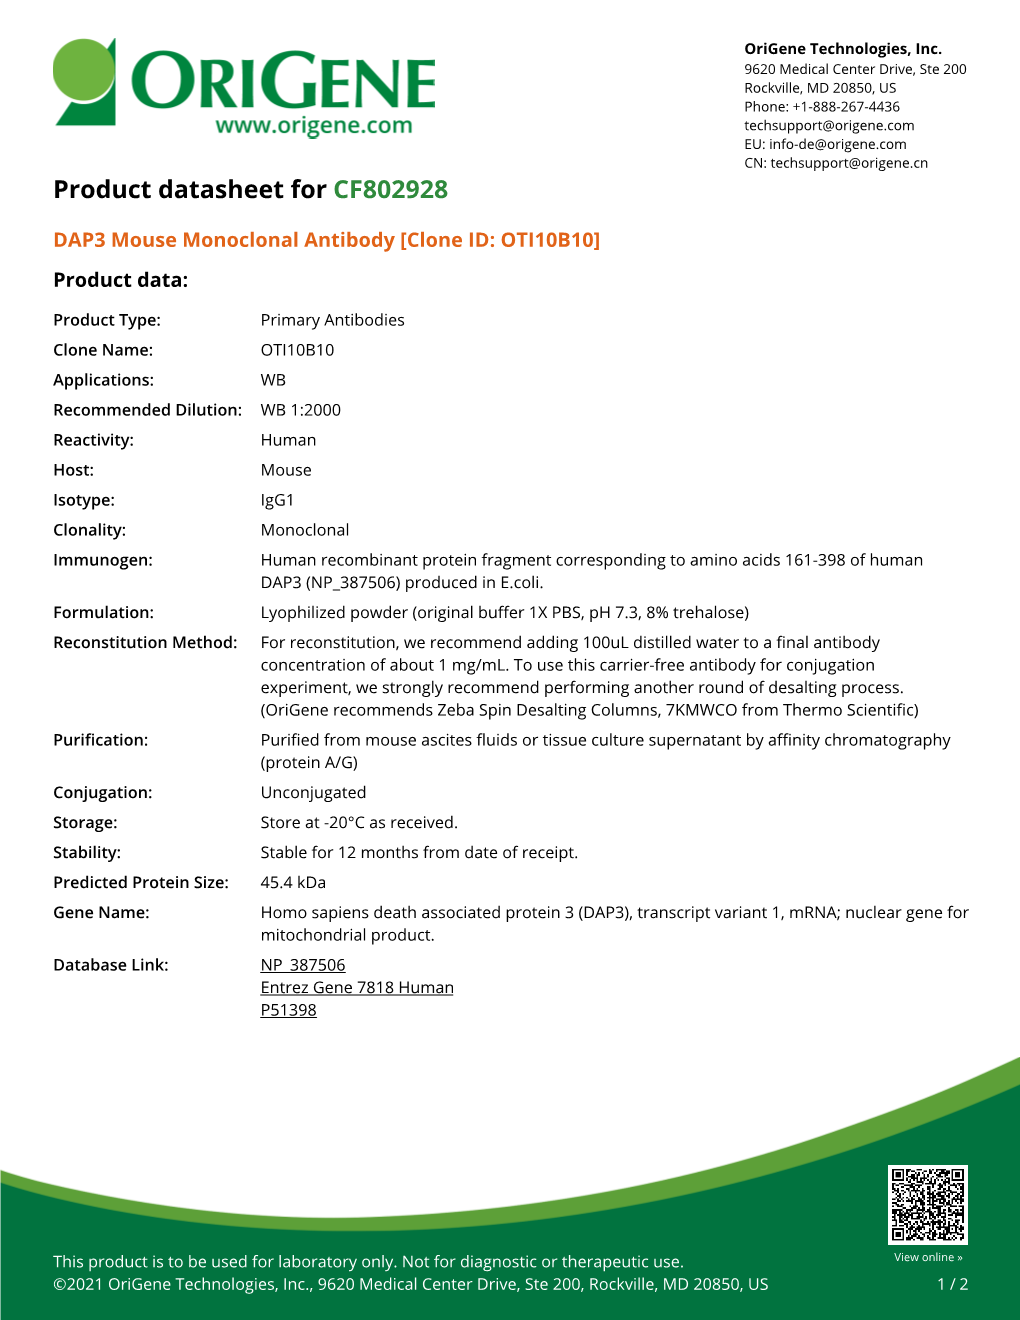 DAP3 Mouse Monoclonal Antibody [Clone ID: OTI10B10] Product Data